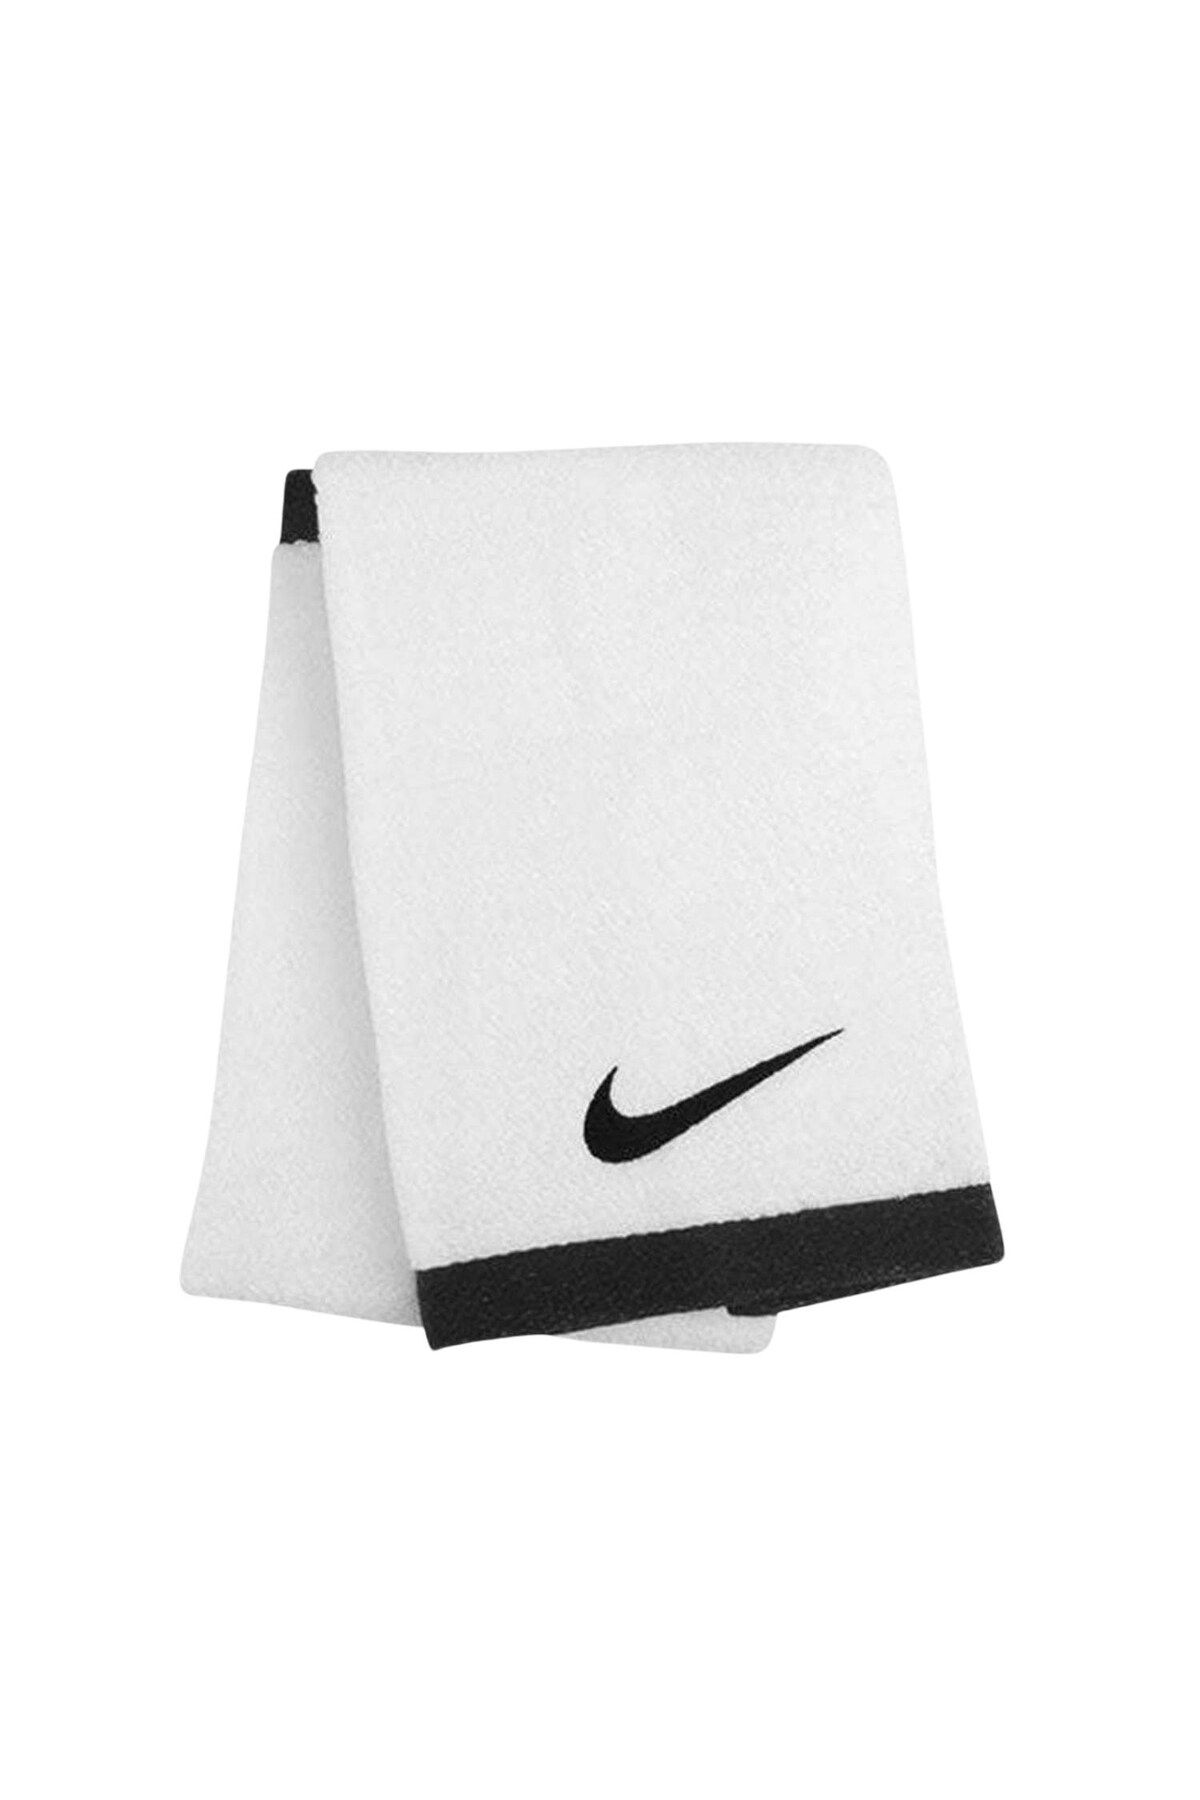 Nike Fundamental Towel Beyaz Havlu